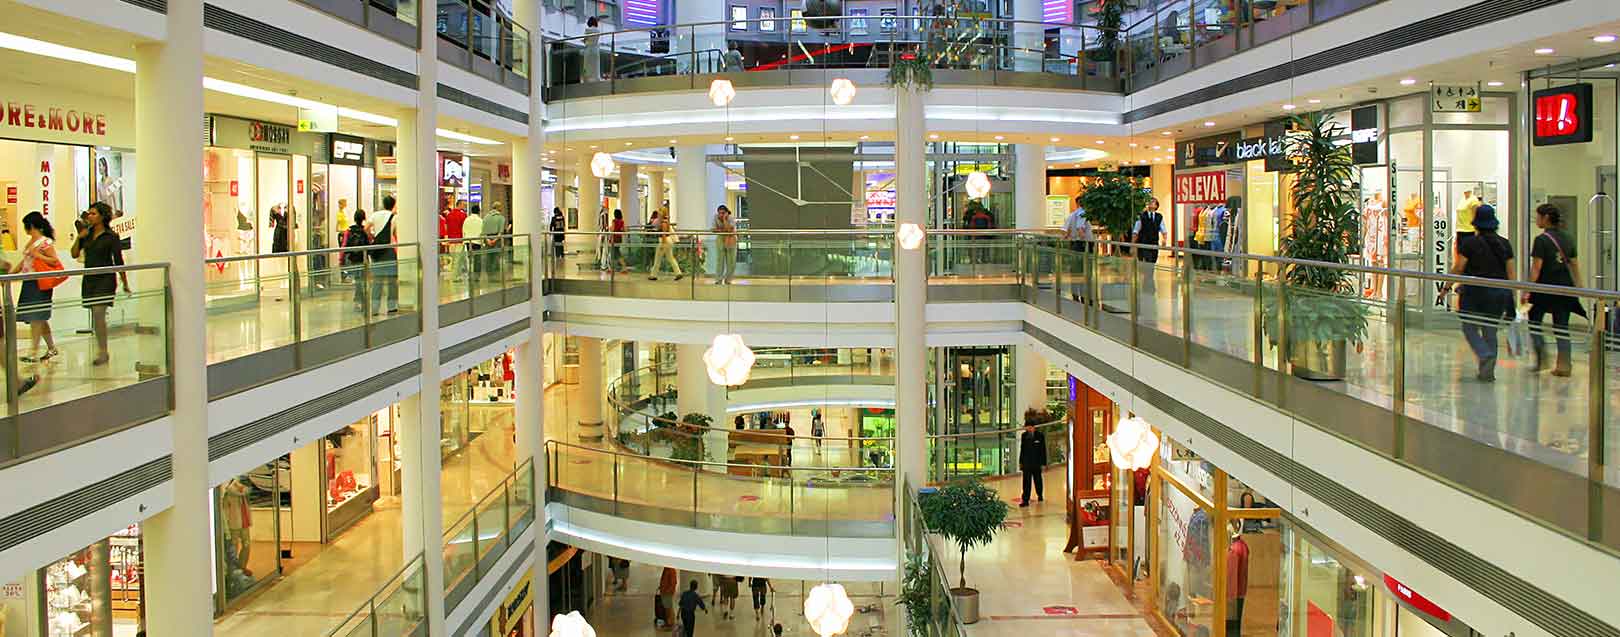 Hyderabad, Bangalore: Top commercial destinations